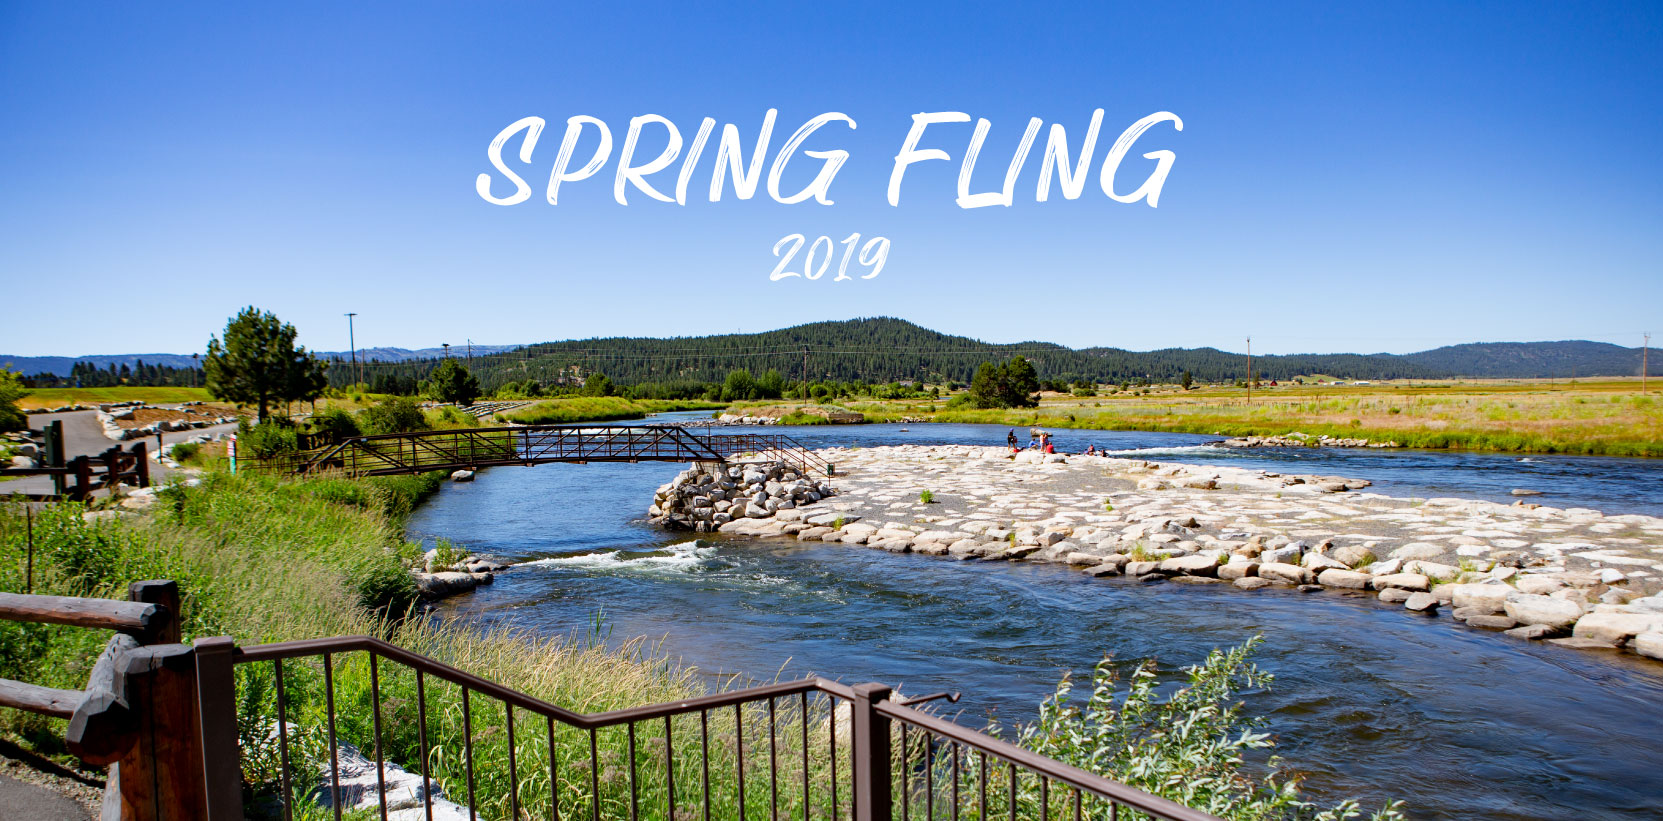 Past Event: Spring Fling 2019